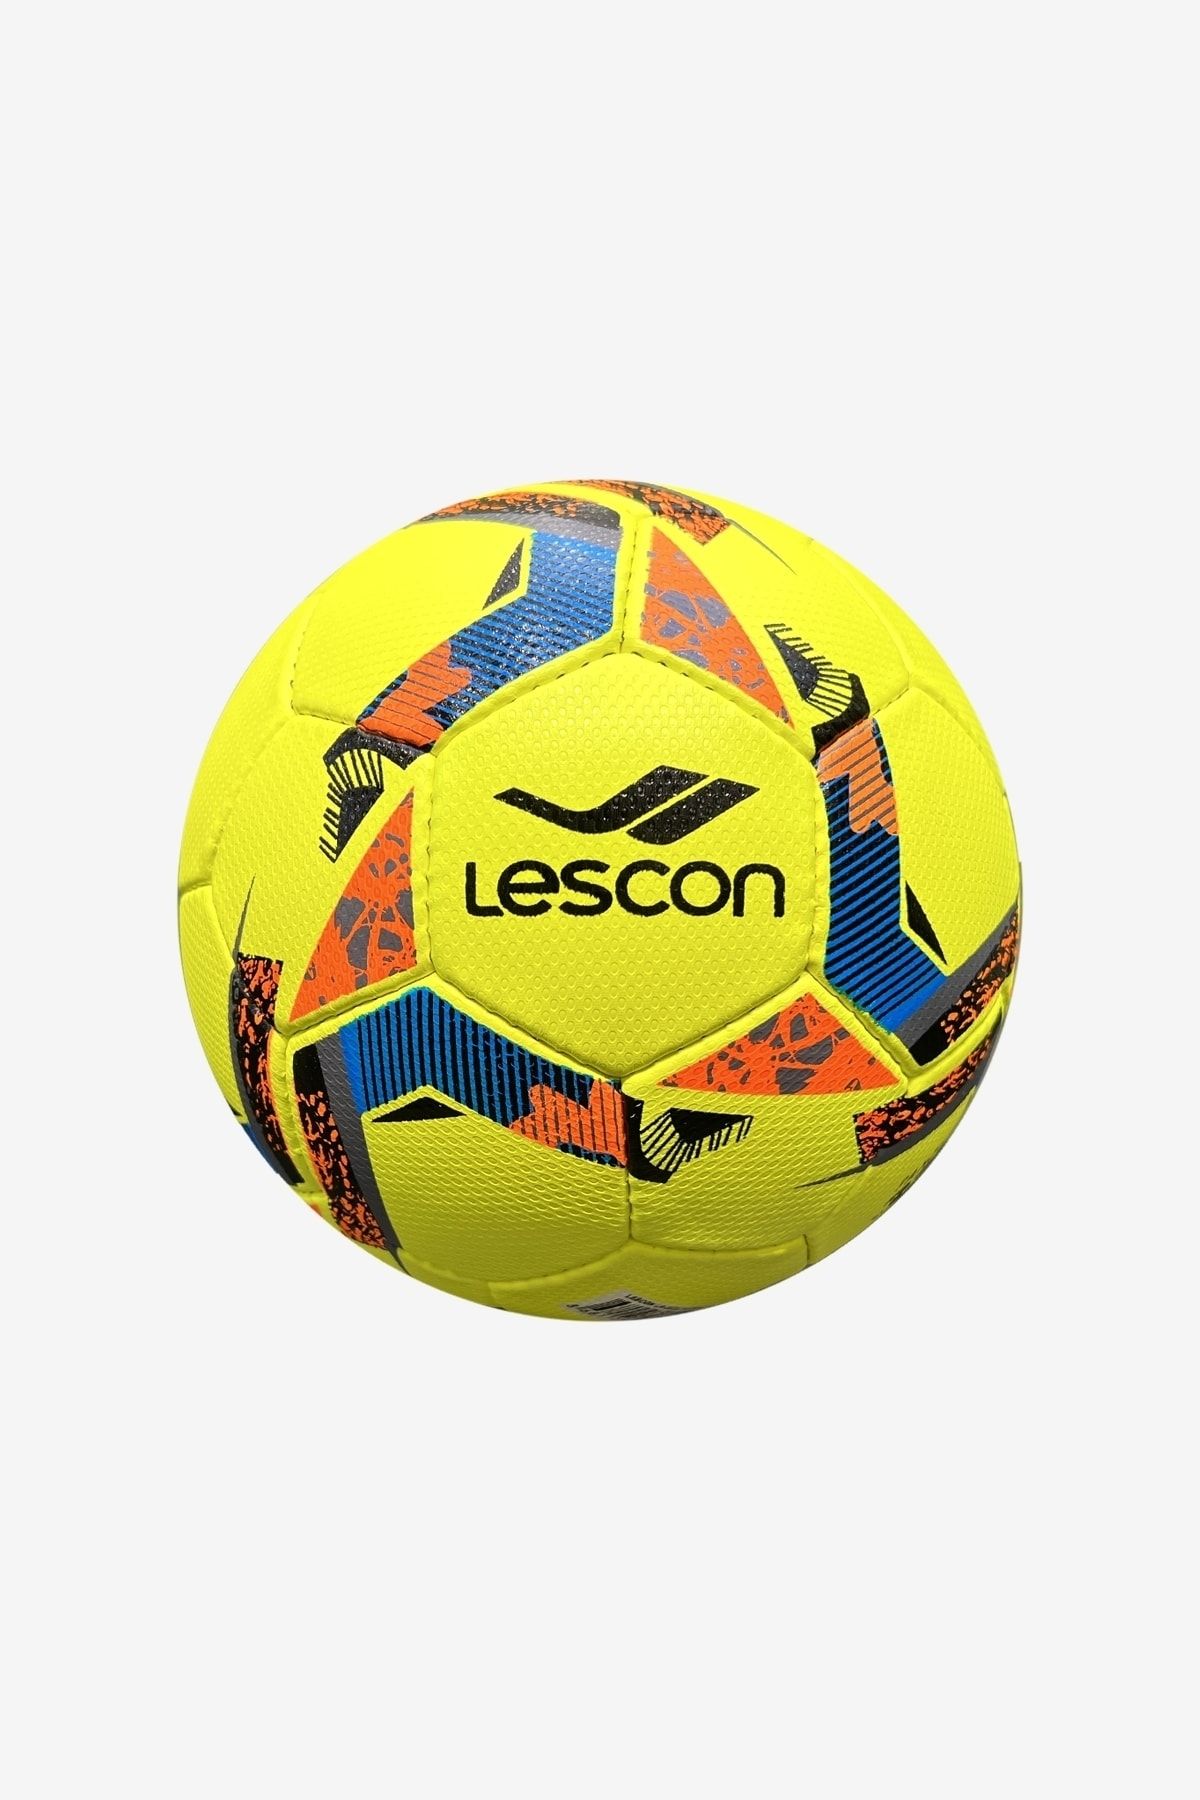 Lescon Escon Fosforlu Yeşil Futbol Topu 4 Numara